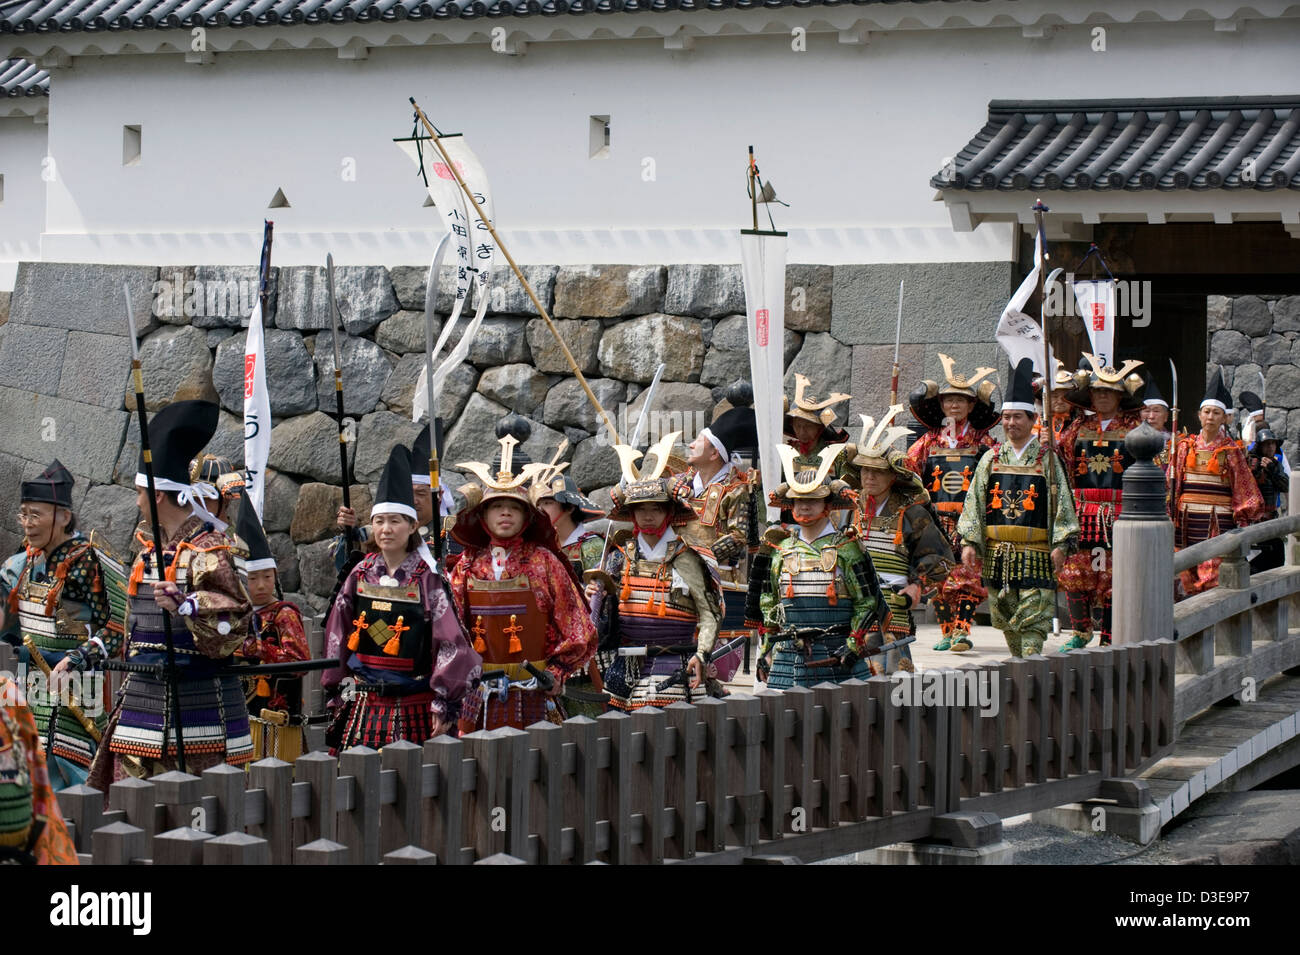 Samurai-Krieger tragen traditionelle Rüstung Kreuzung Graben Brücke am Akaganemon Tor in Odawara Hojo Godai Matsuri Festival. Stockfoto